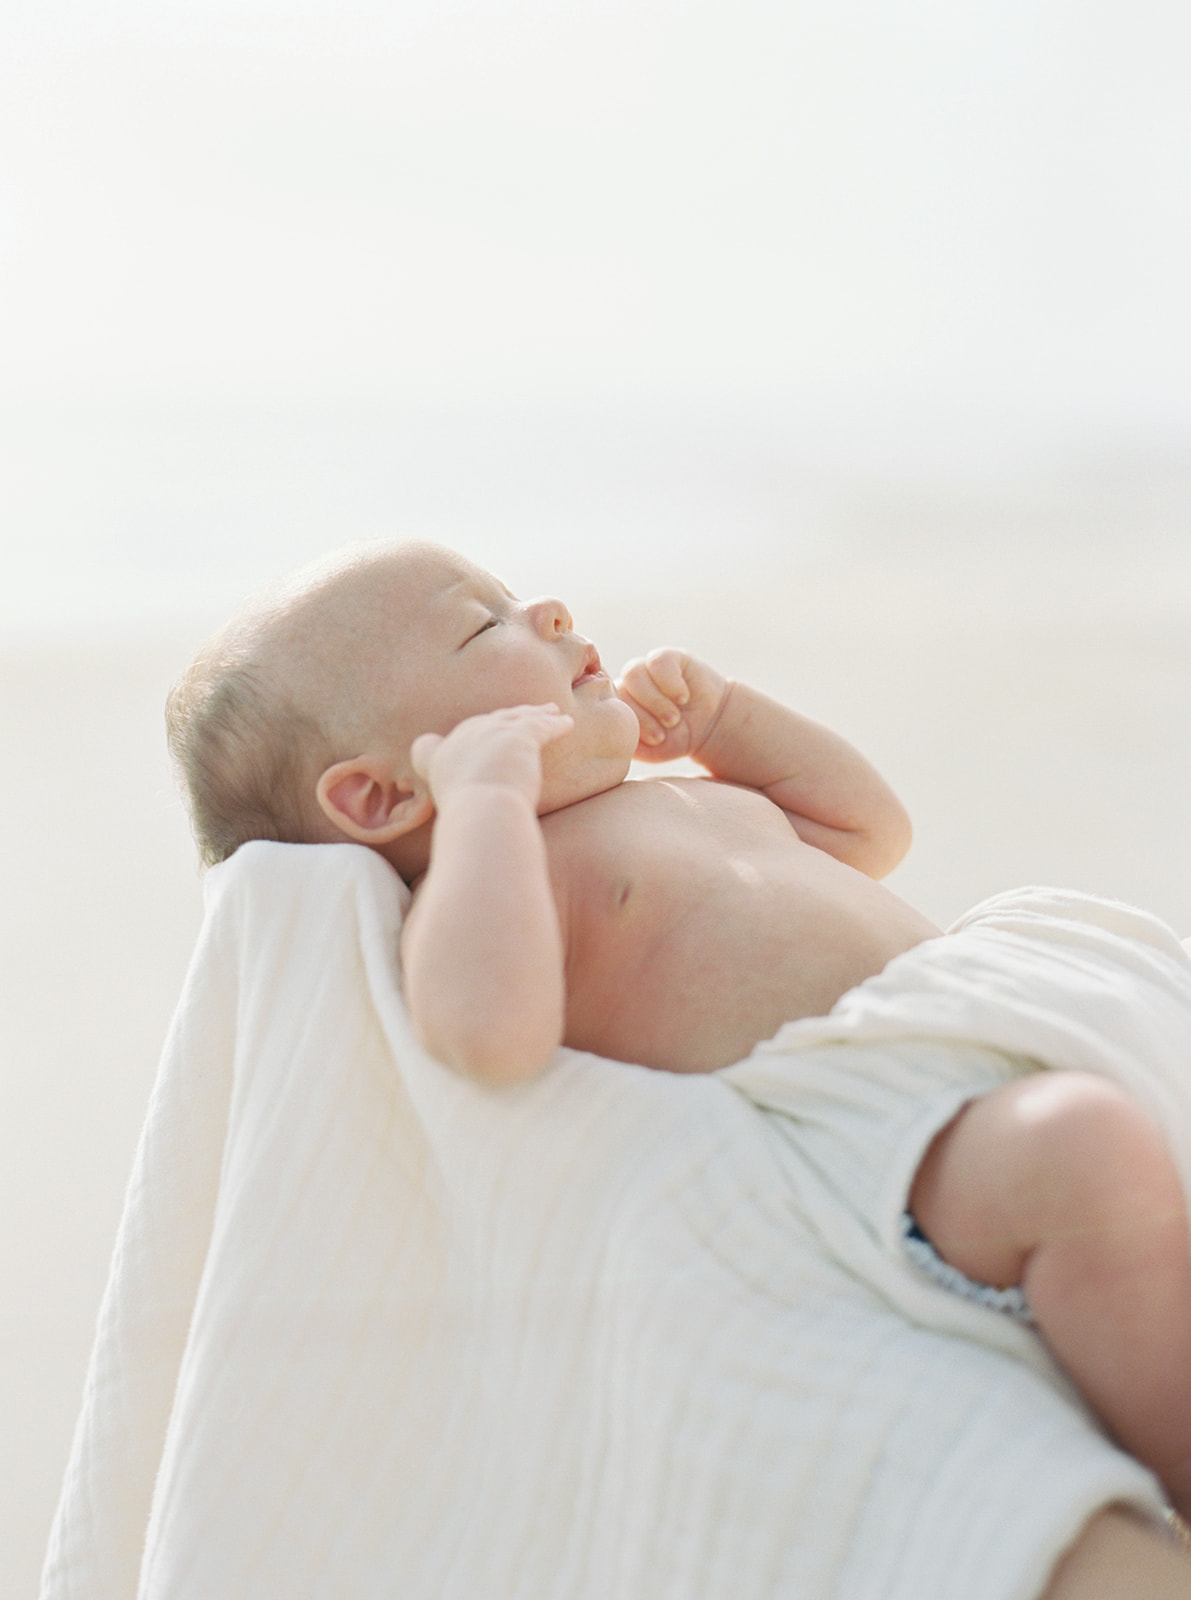 Baby is held in organic blanket during newborn beach portraits.